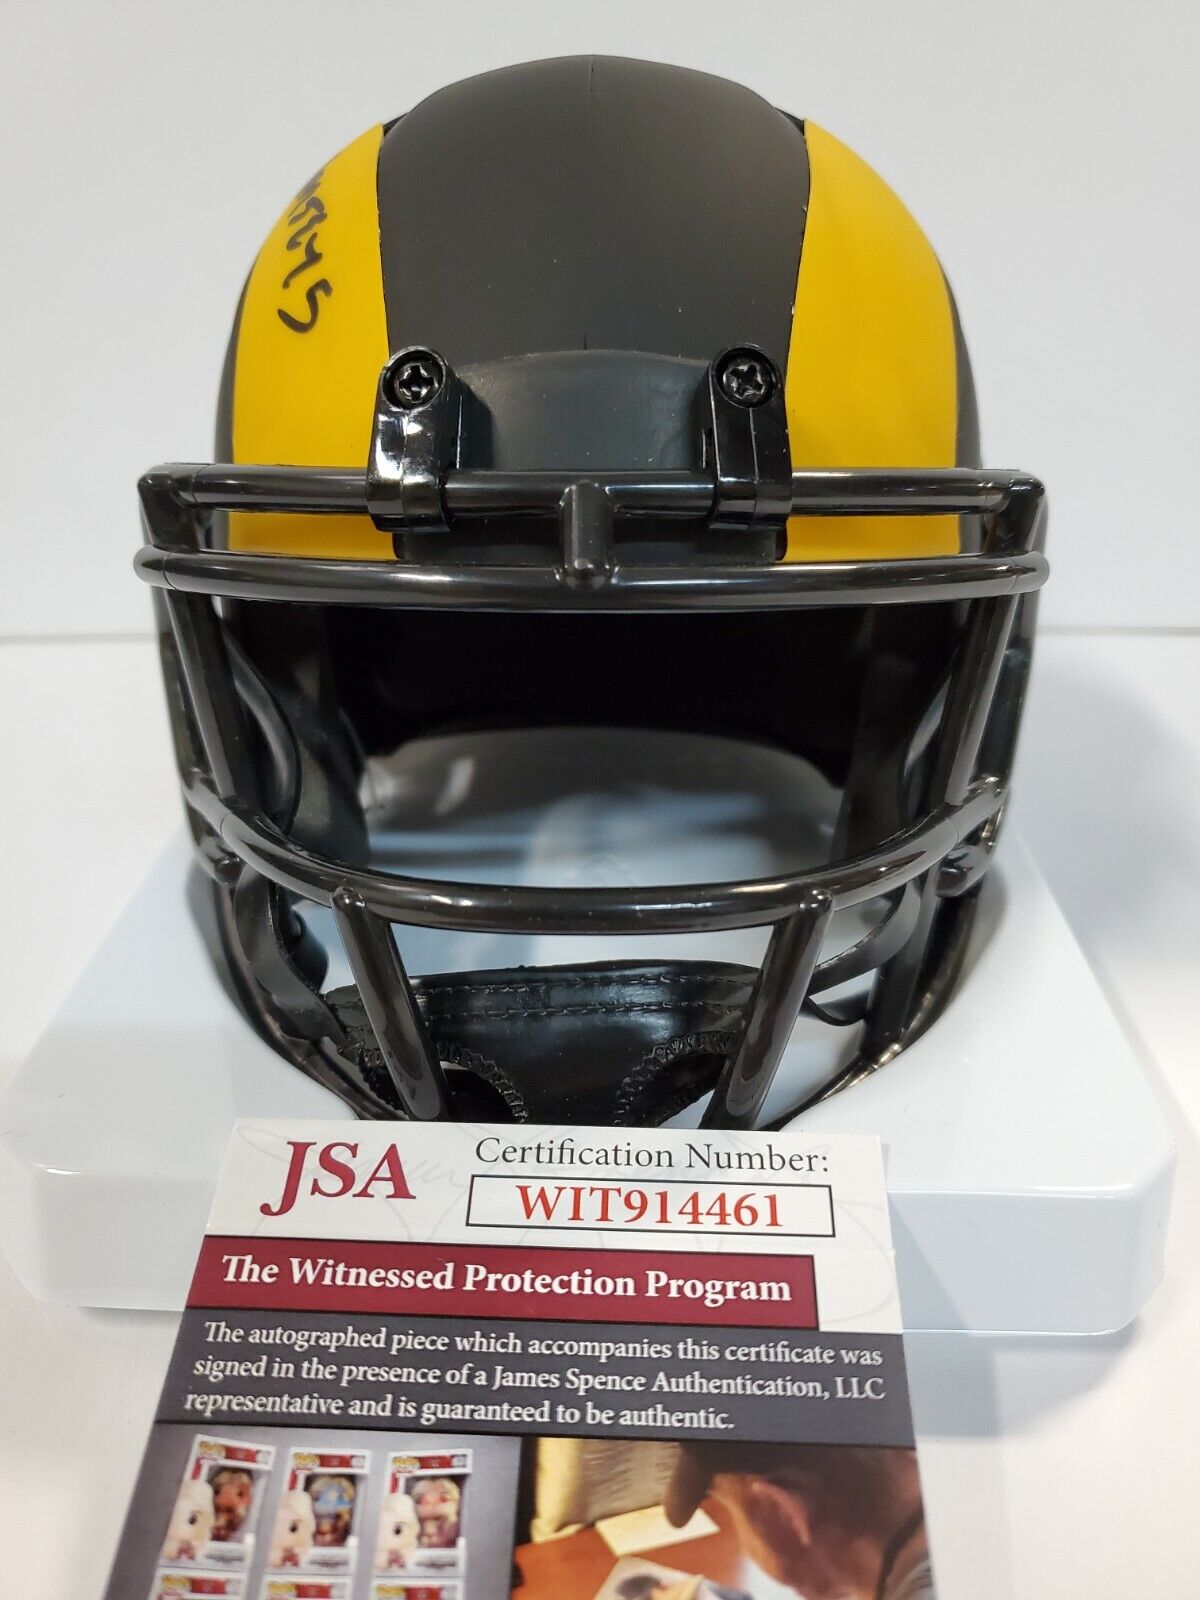 MVP Authentics Los Angeles Rams Jalen Ramsey Autographed Eclipse Mini Helmet Jsa Coa 171 sports jersey framing , jersey framing